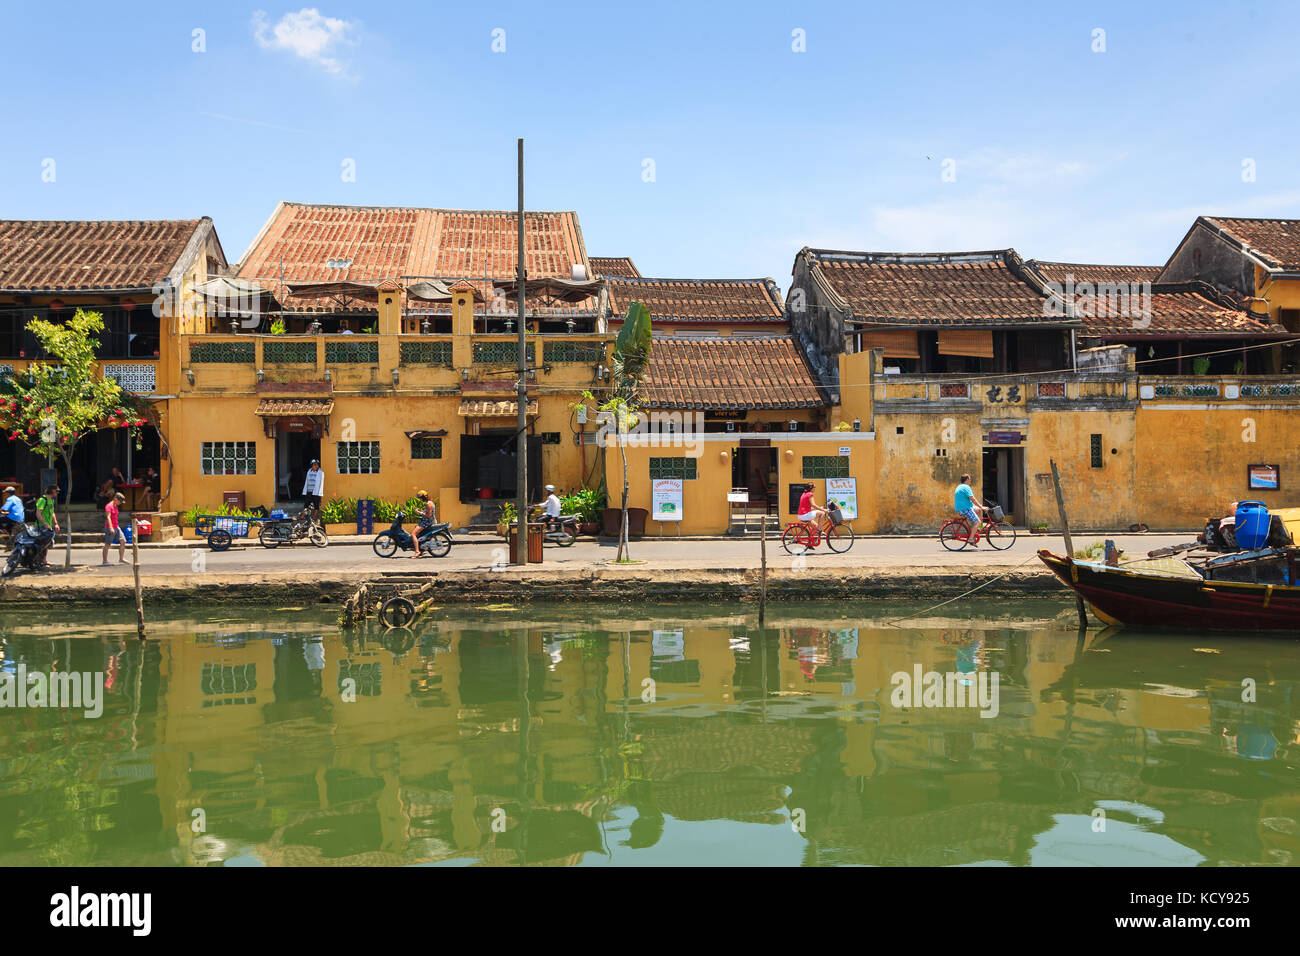 Antica città di Hoi An, Thu Bon, Riverside, Quang Nam, Vietnam. Hoi An è riconosciuta come patrimonio mondiale dall'UNESCO. Foto Stock